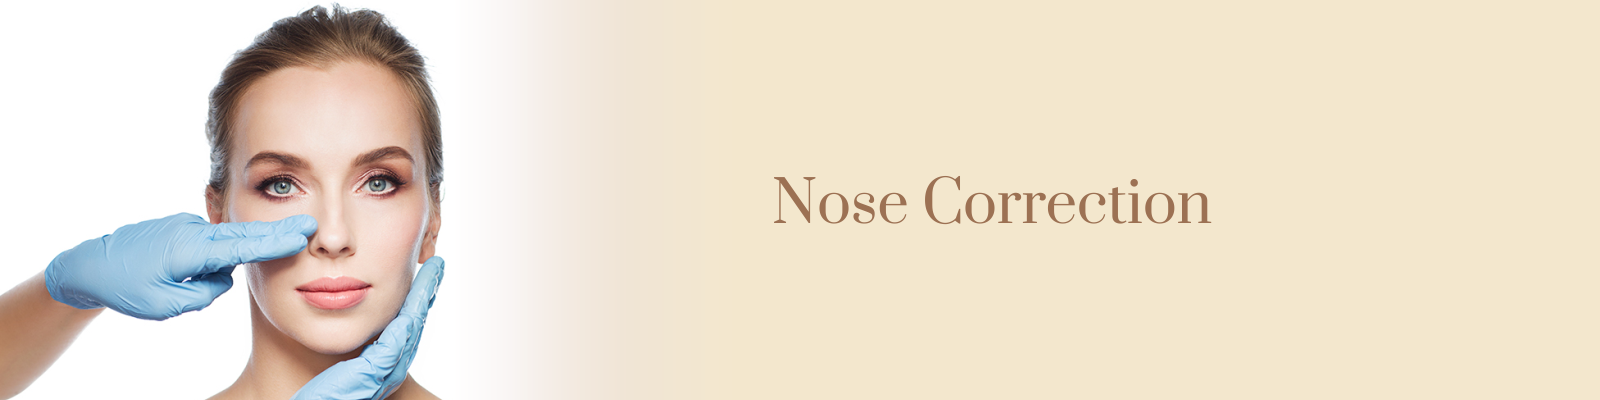 Nose Correction Treatment in Delhi